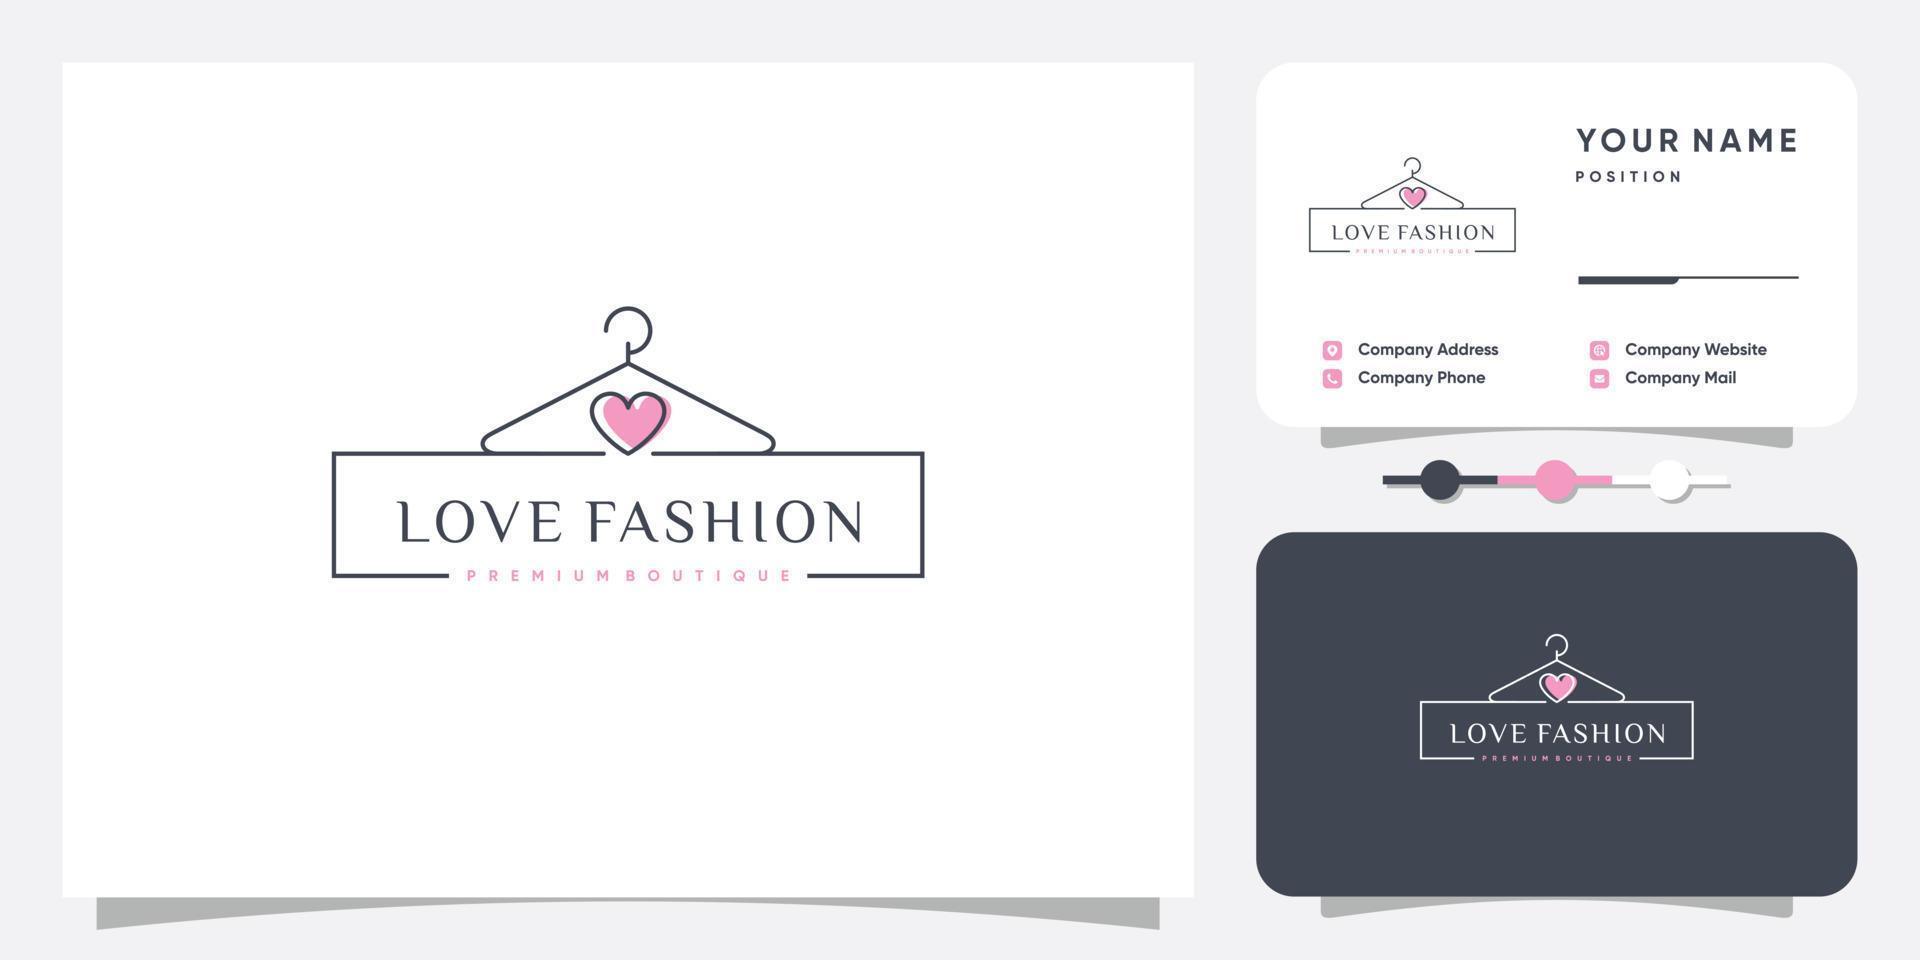 Mode-Logo-Vektor mit minimalistischem Design Premium-Vektor vektor